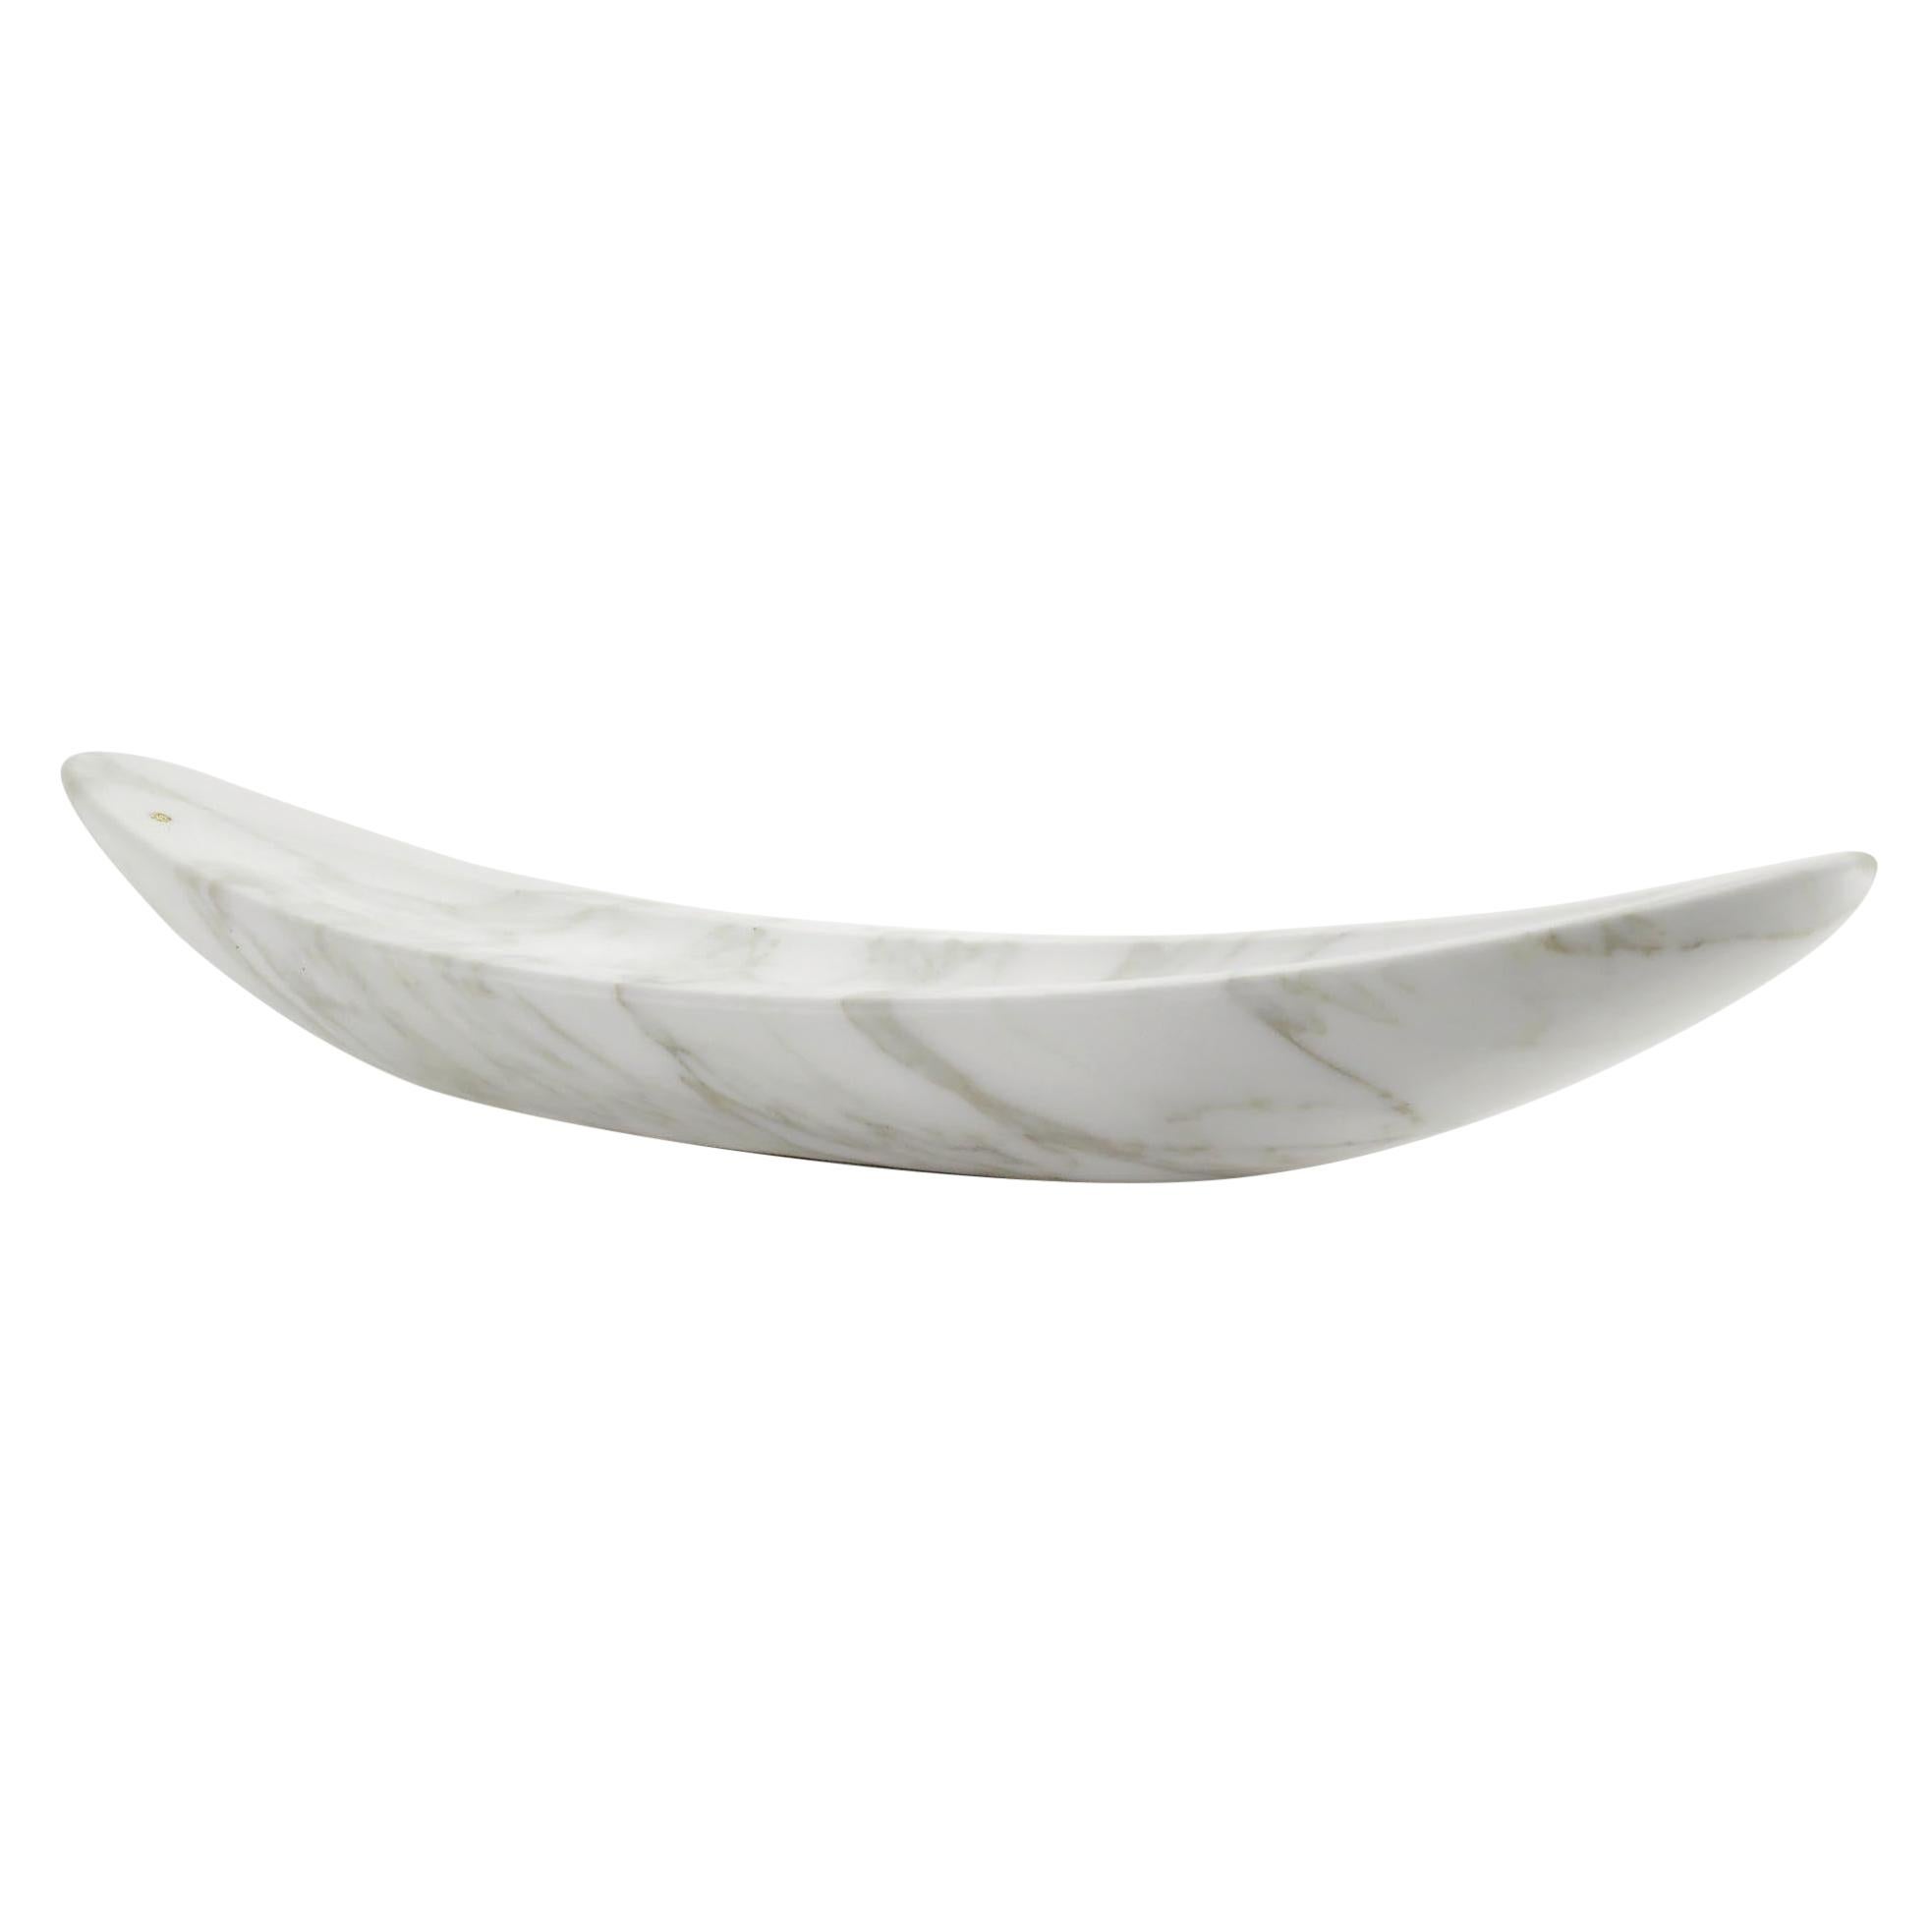 Decorative Bowl Centerpiece Vessel Sculpture White Calacatta Marble Handmade